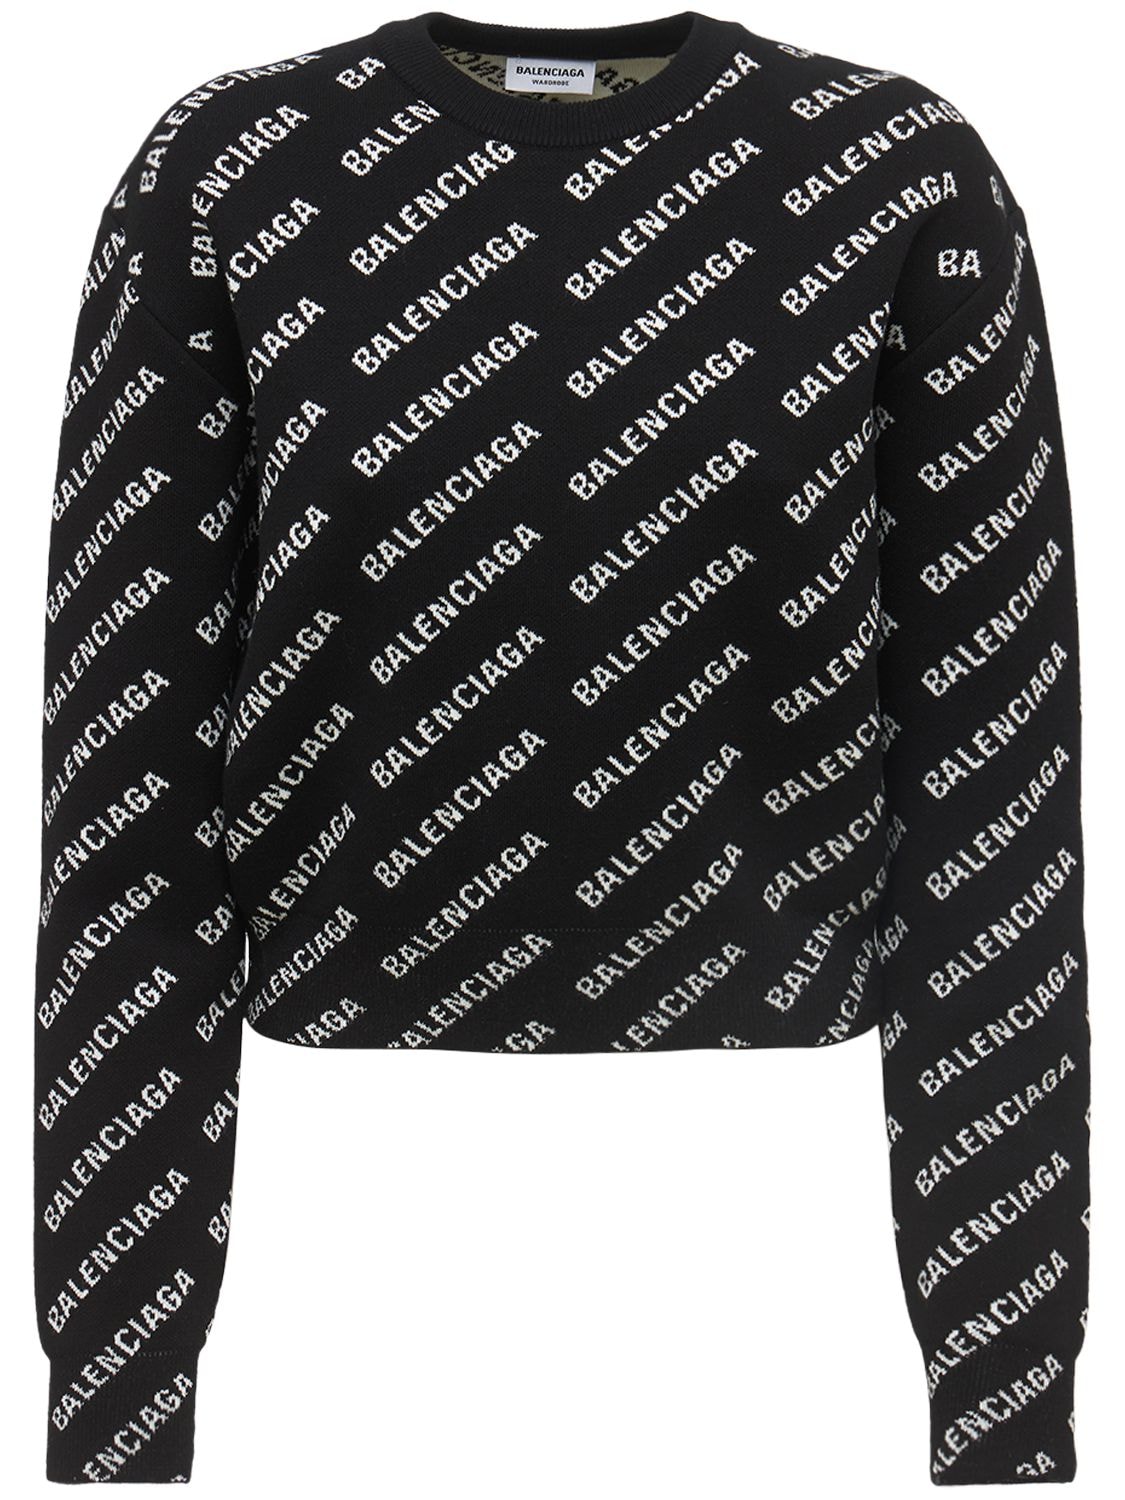 Balenciaga - All over mini logo cotton blend sweater - Black/White ...